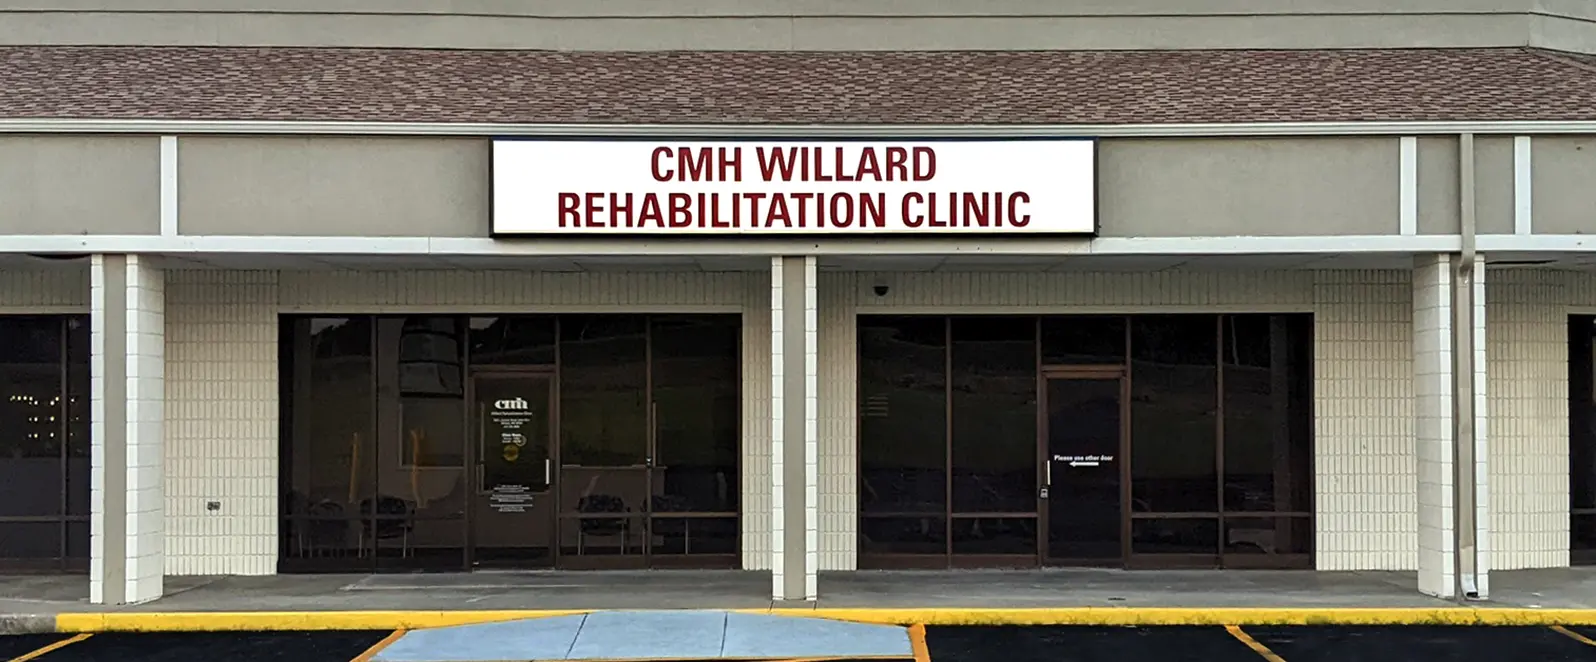 Willard Rehabilitation Clinic exterior